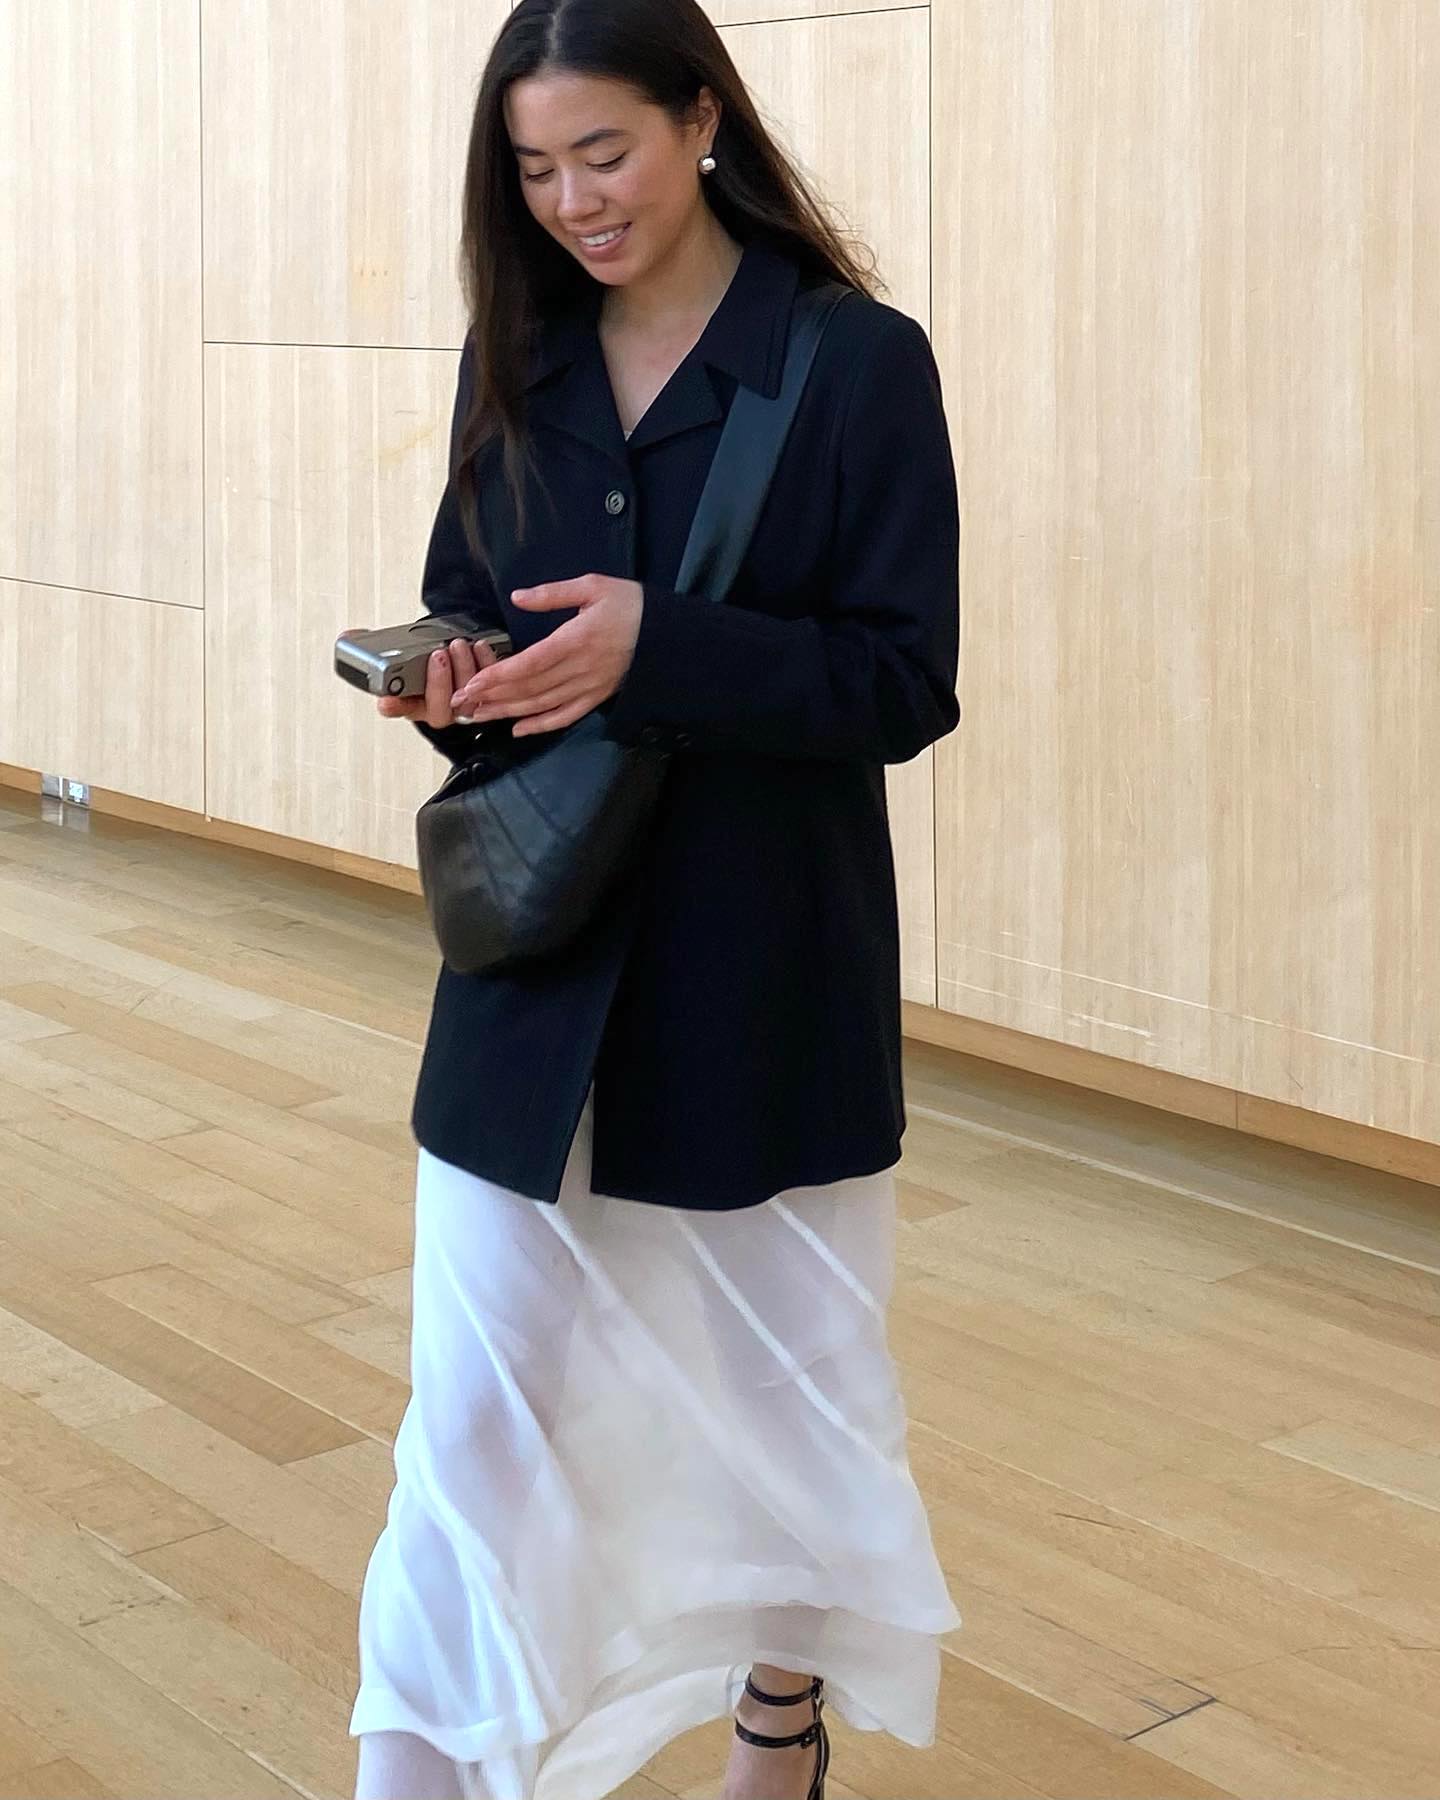 fashion influencer Sasha Mei wears a sheer white dress and black blazer